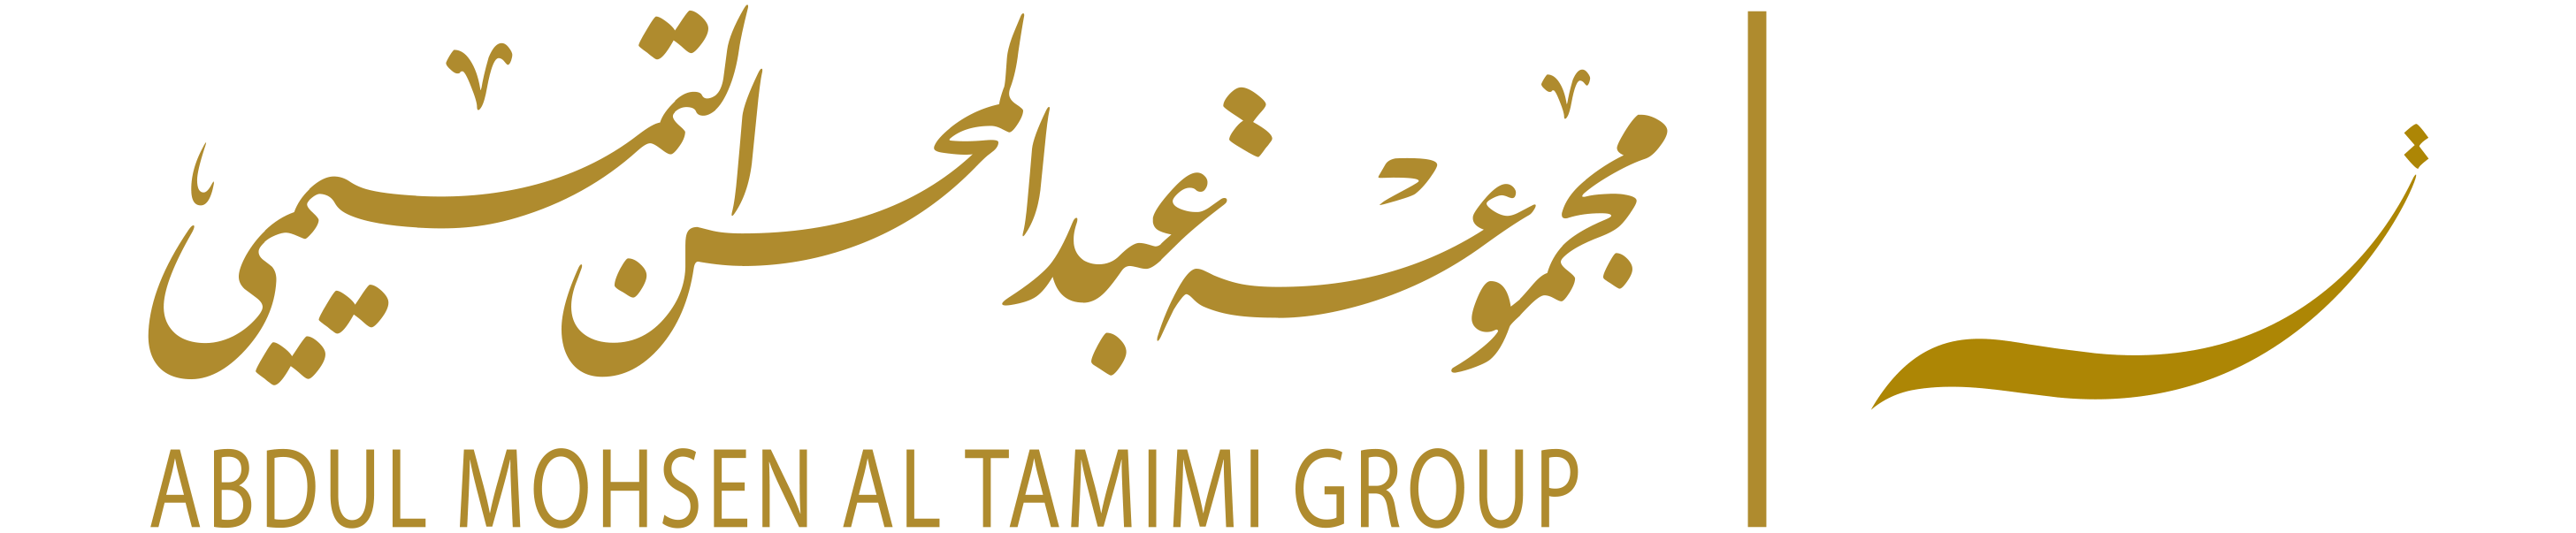 Abdulmohsen Al-Tamimi Group